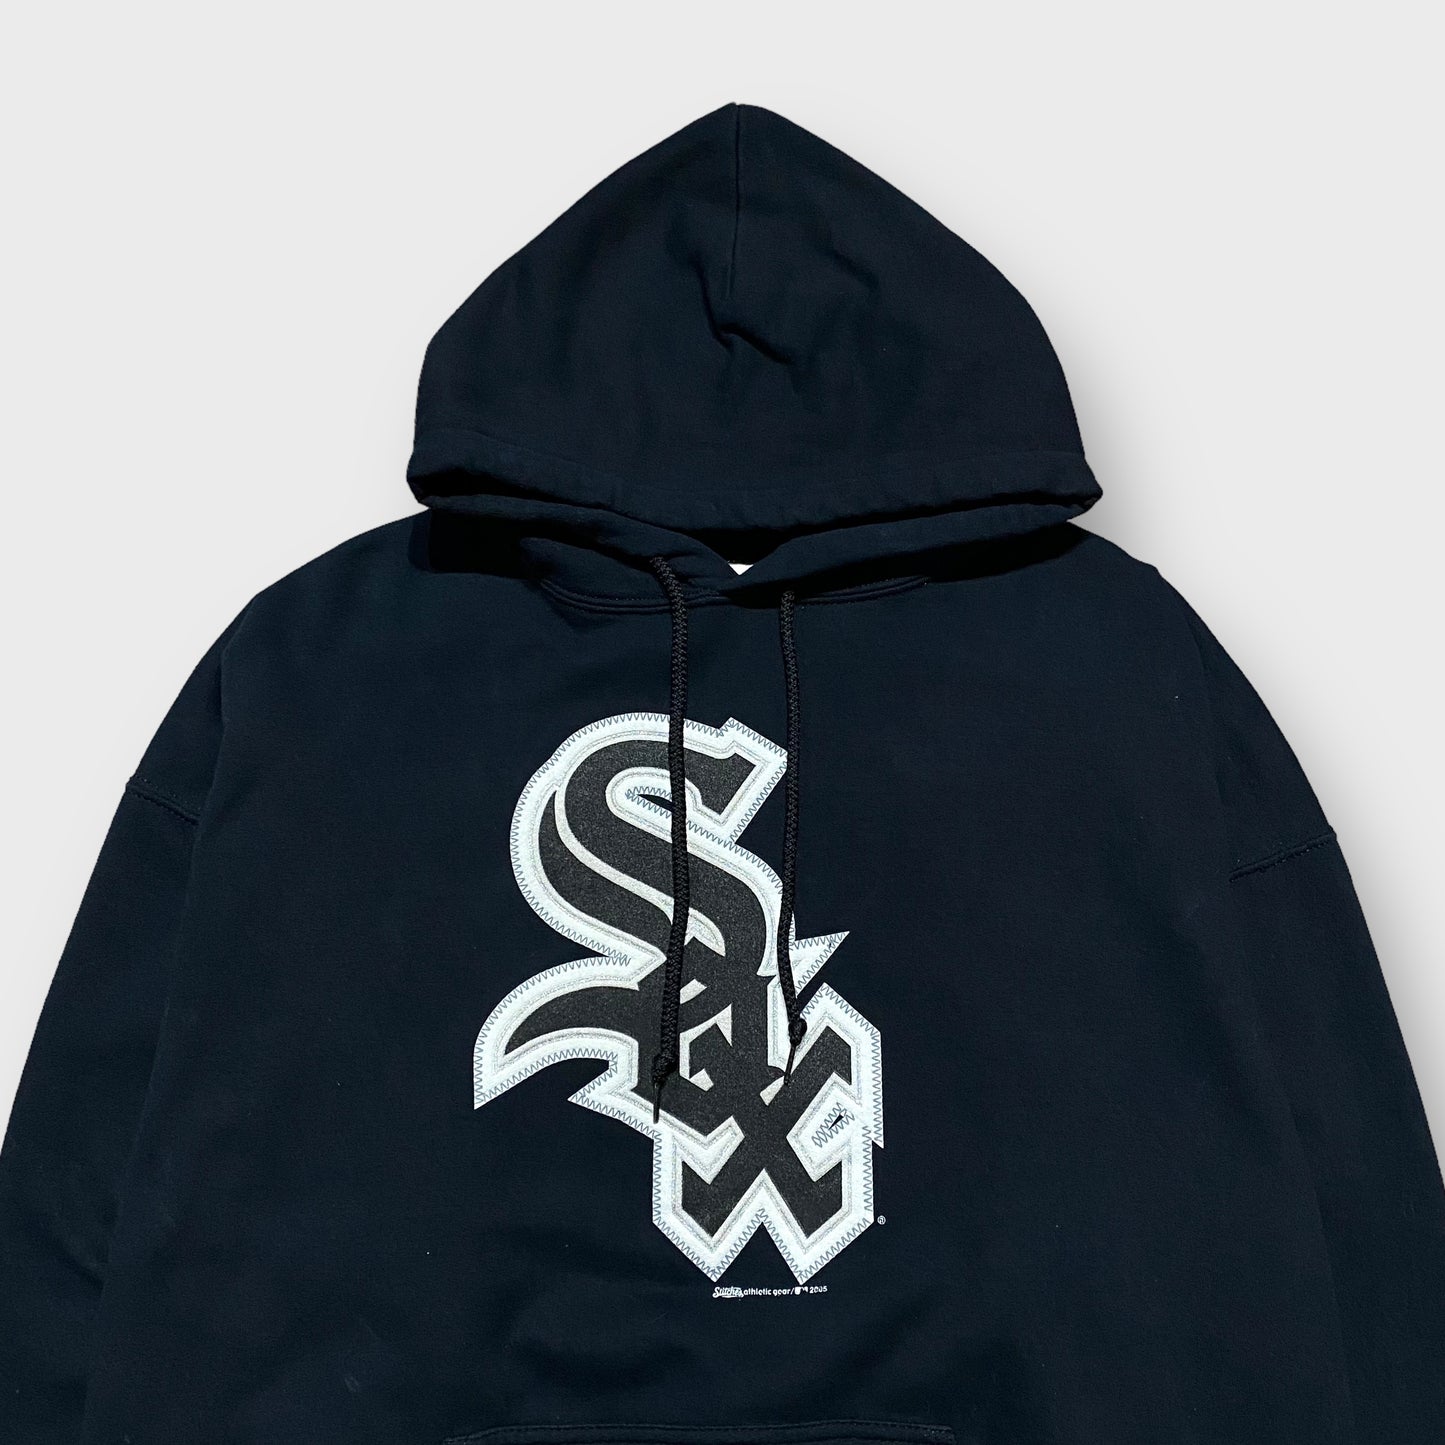 00's "Chicago Whitesox" Team hoodie